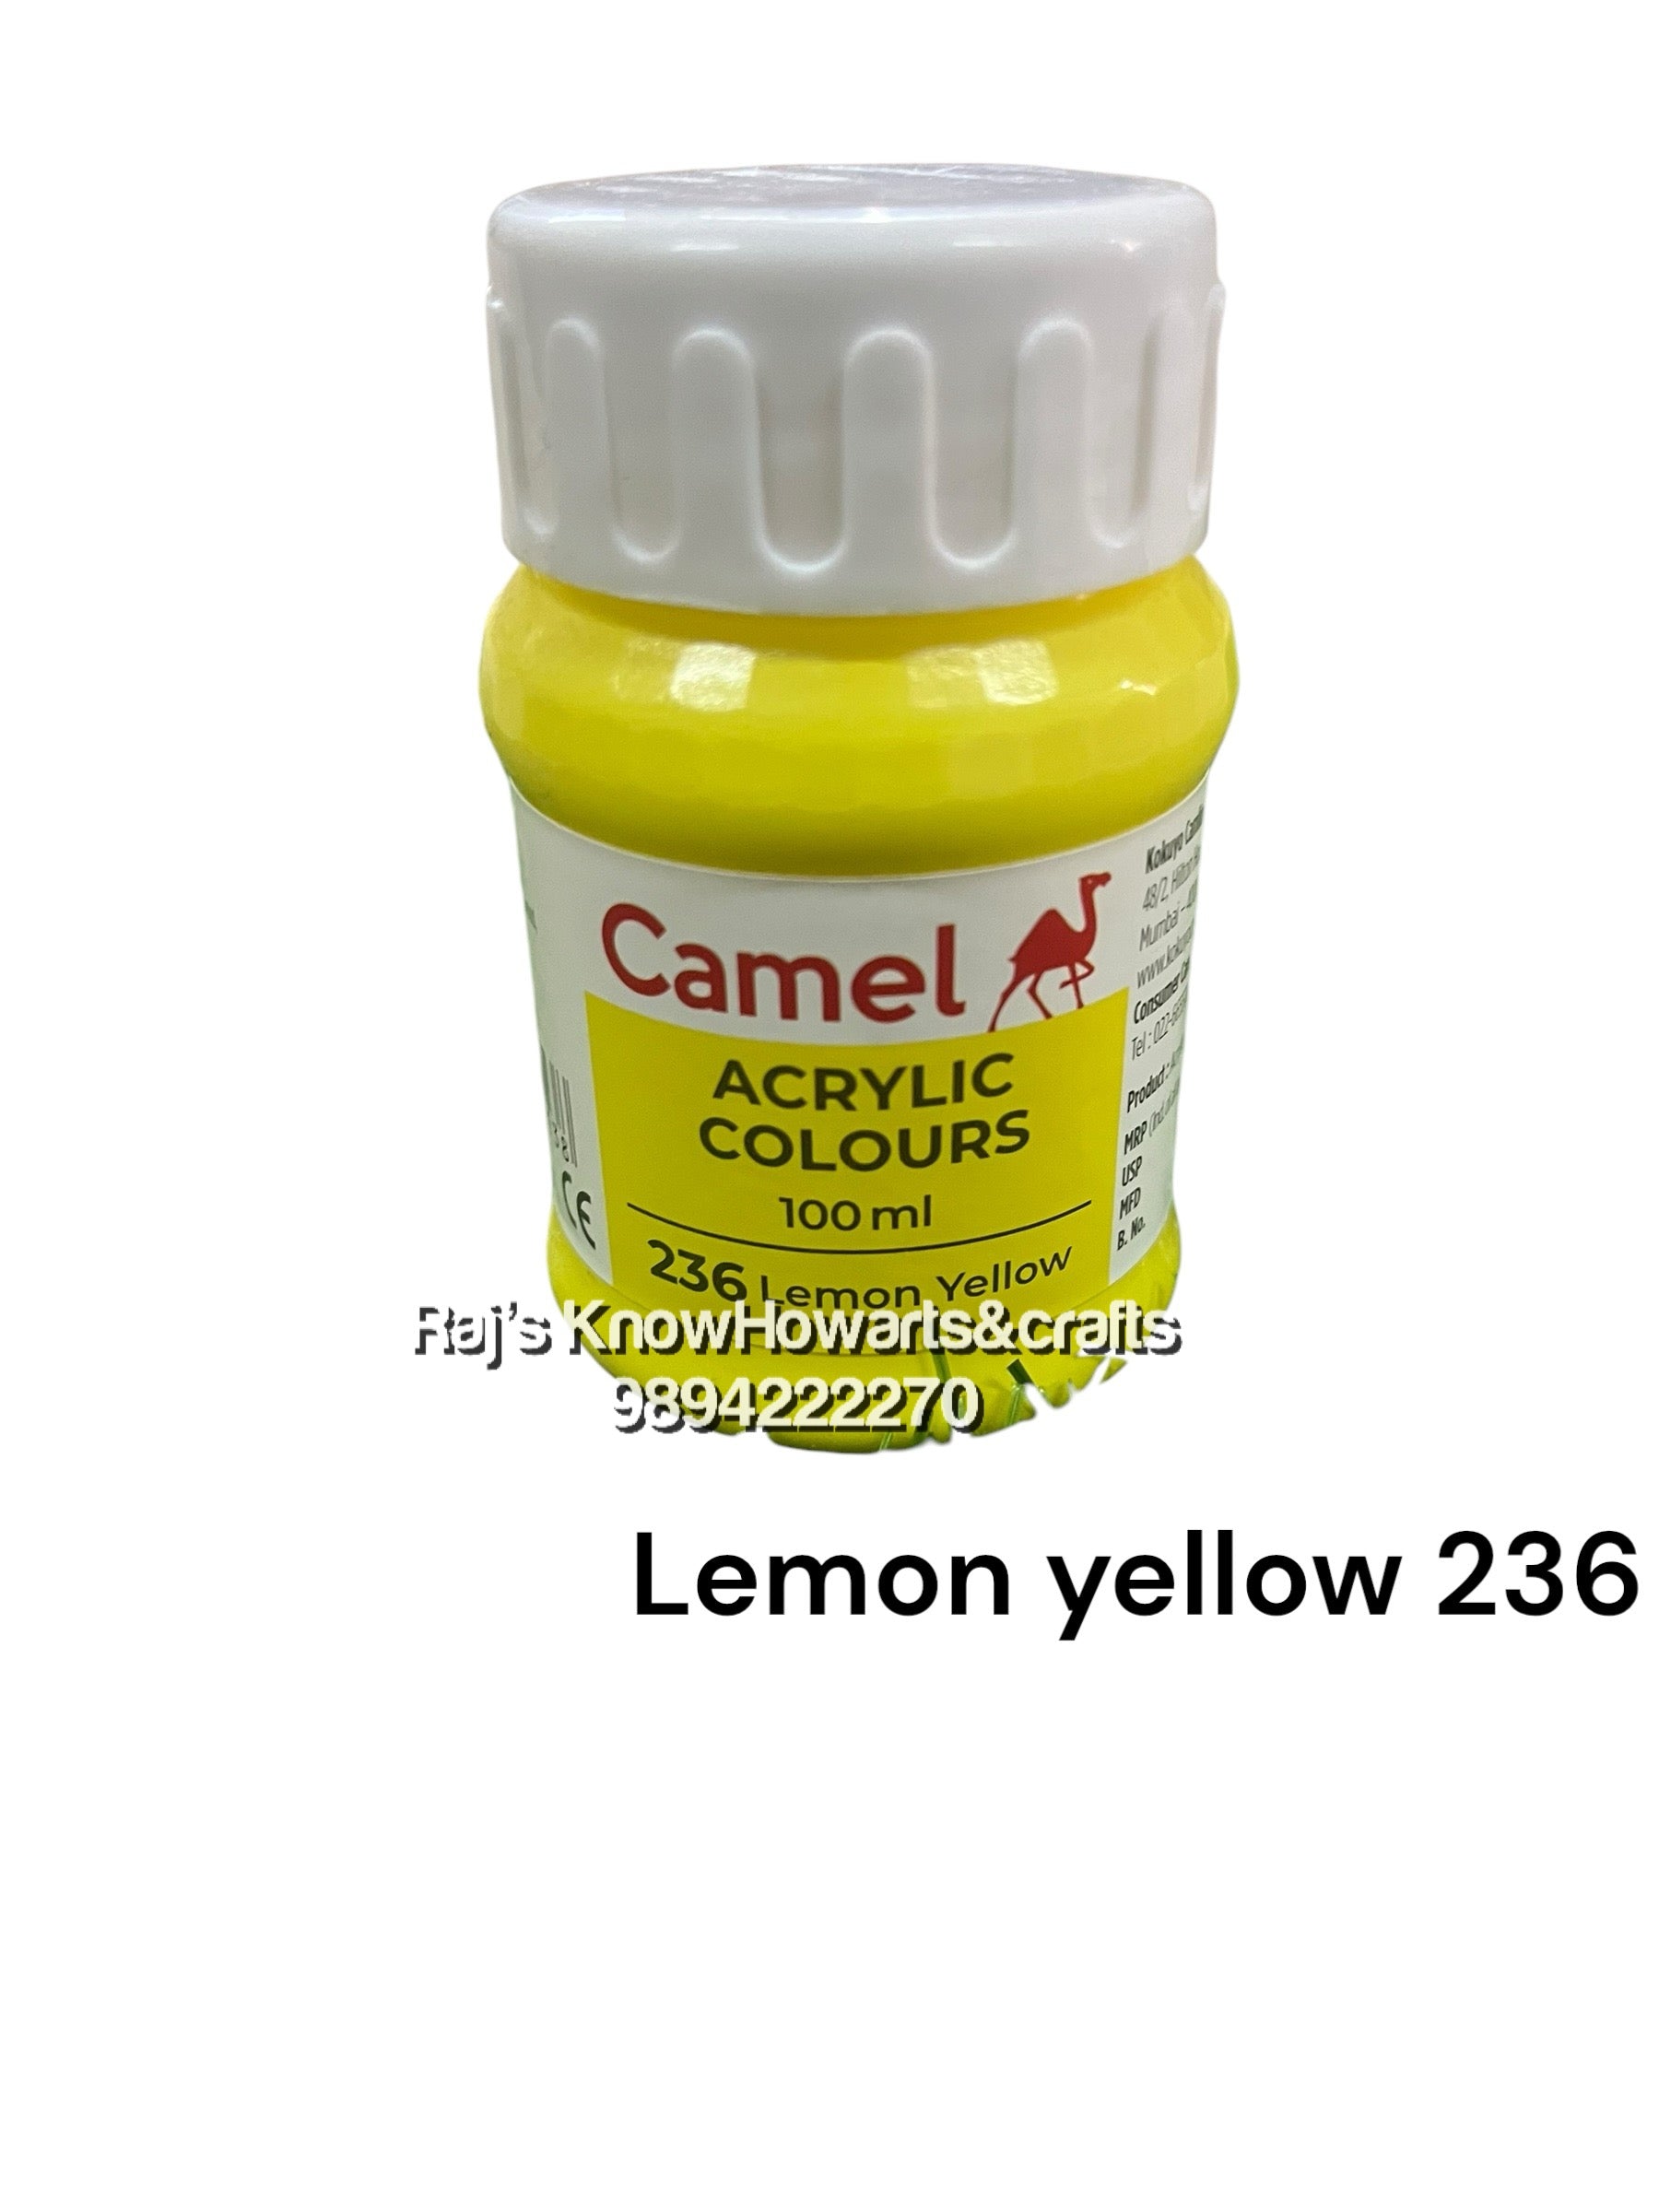 Camel Acrylic colours lemon yellow 236 100 ml